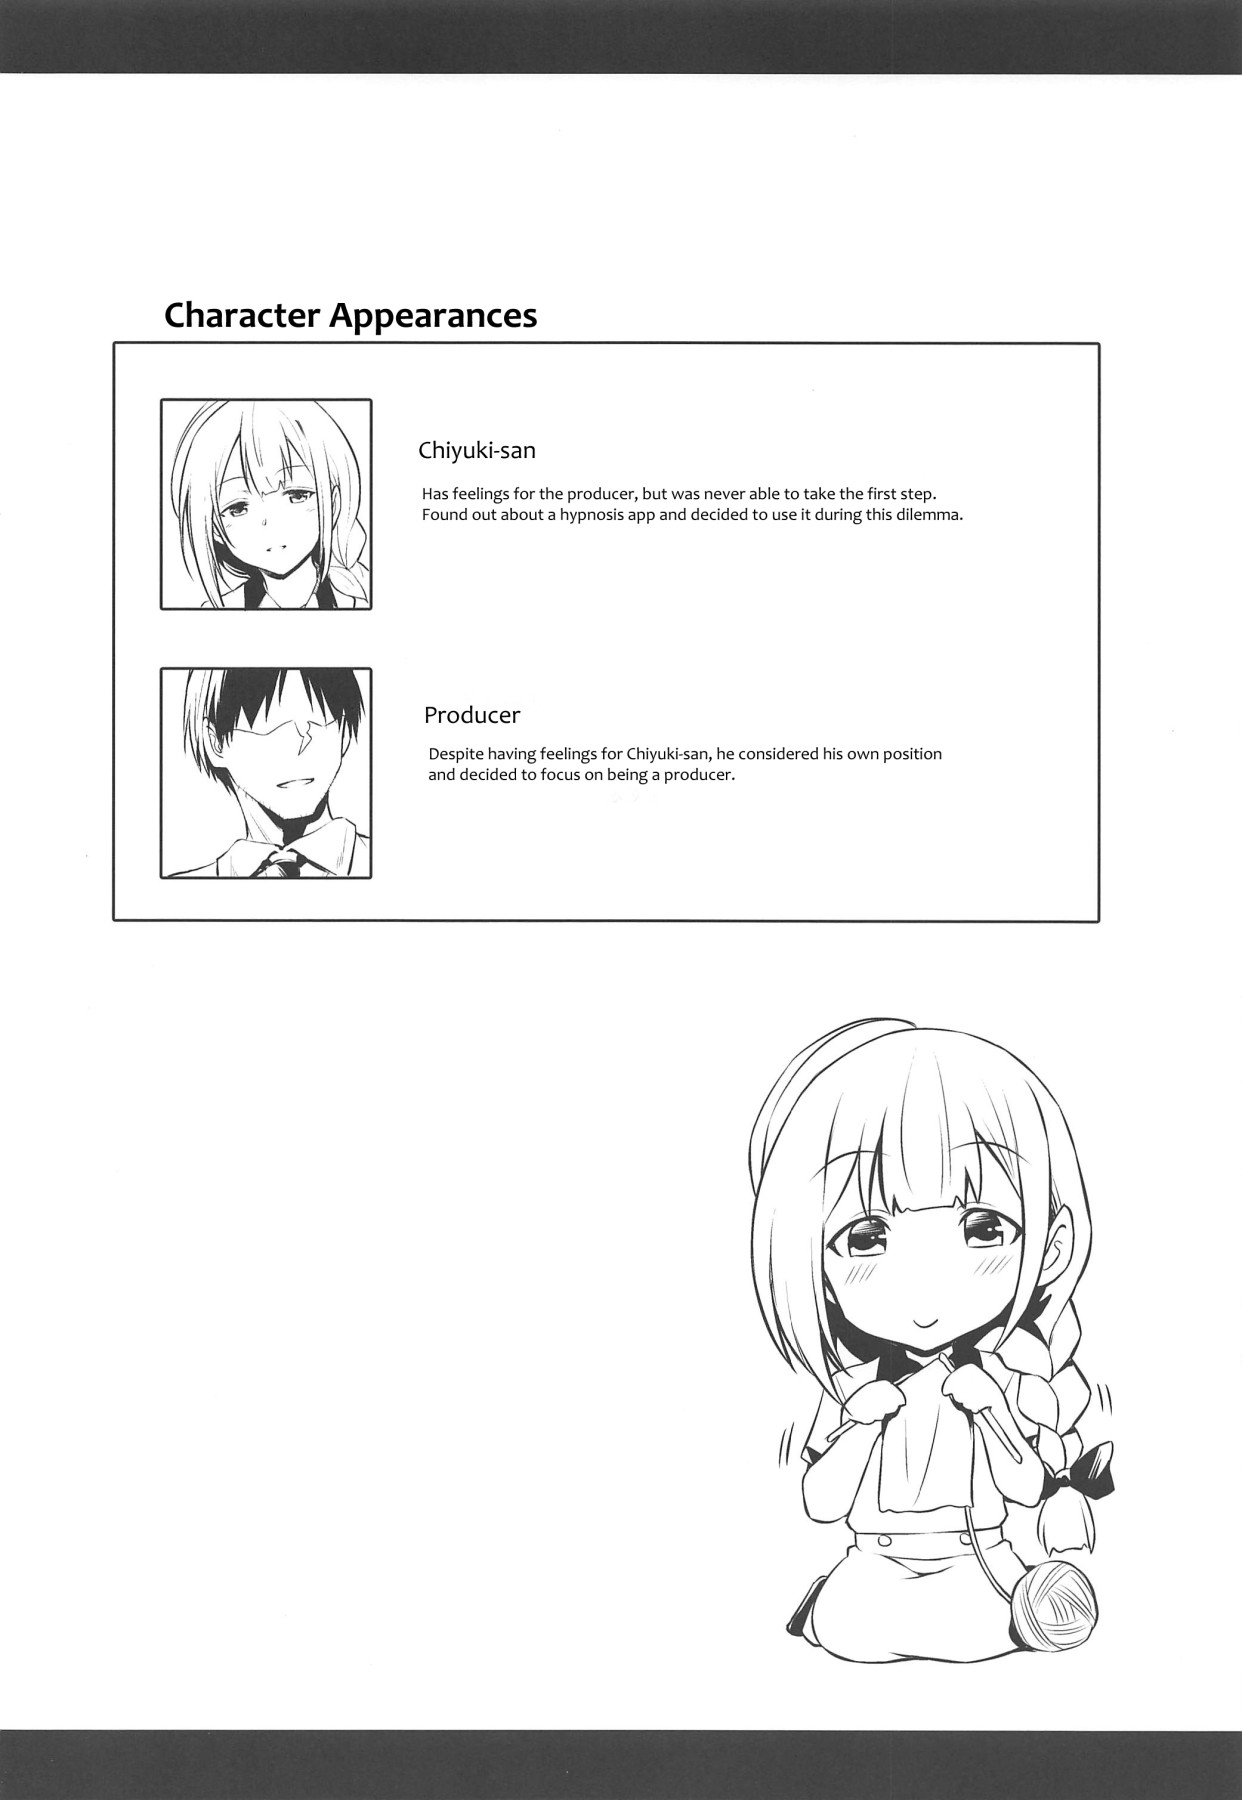 Hentai Manga Comic-Chiyuki-san's Hypno App-Read-3